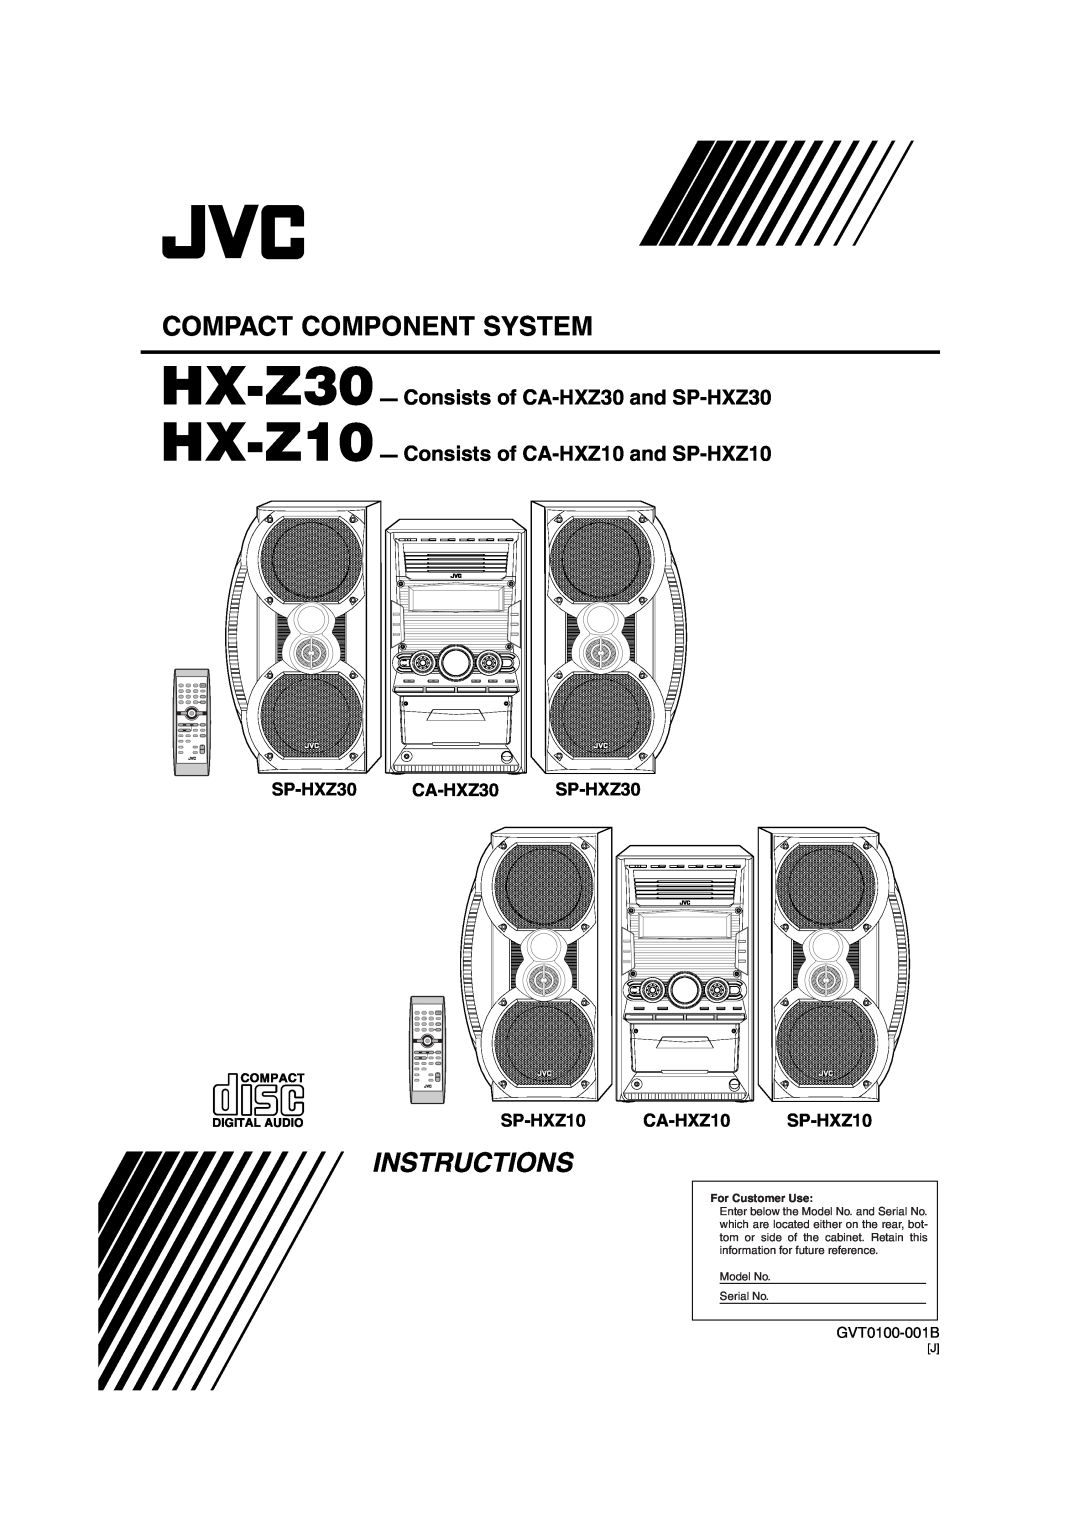 JVC manual HX-Z30- Consists of CA-HXZ30and SP-HXZ30, HX-Z10- Consists of CA-HXZ10and SP-HXZ10, Compact Component System 